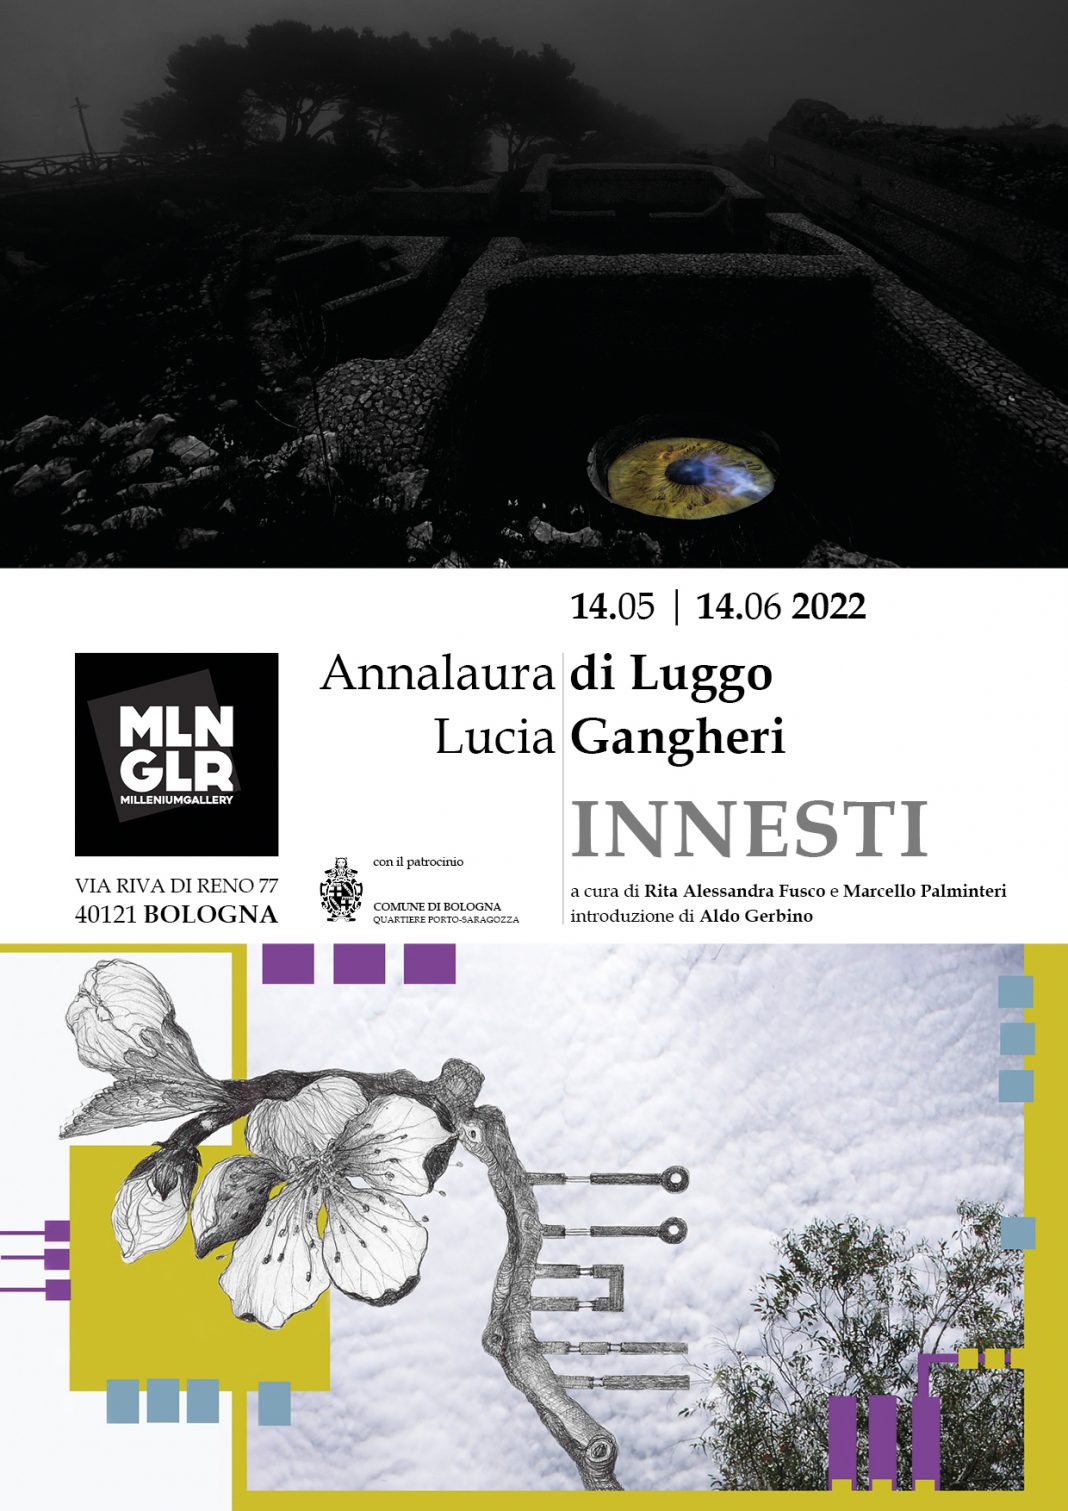 Annalaura di Luggo / Lucia Gangheri – Innestihttps://www.exibart.com/repository/media/formidable/11/img/d7c/Locandina-INNESTI-Annalaura-di-Luggo-e-Lucia-Gangheri-BOLOGNA-1068x1511.jpg